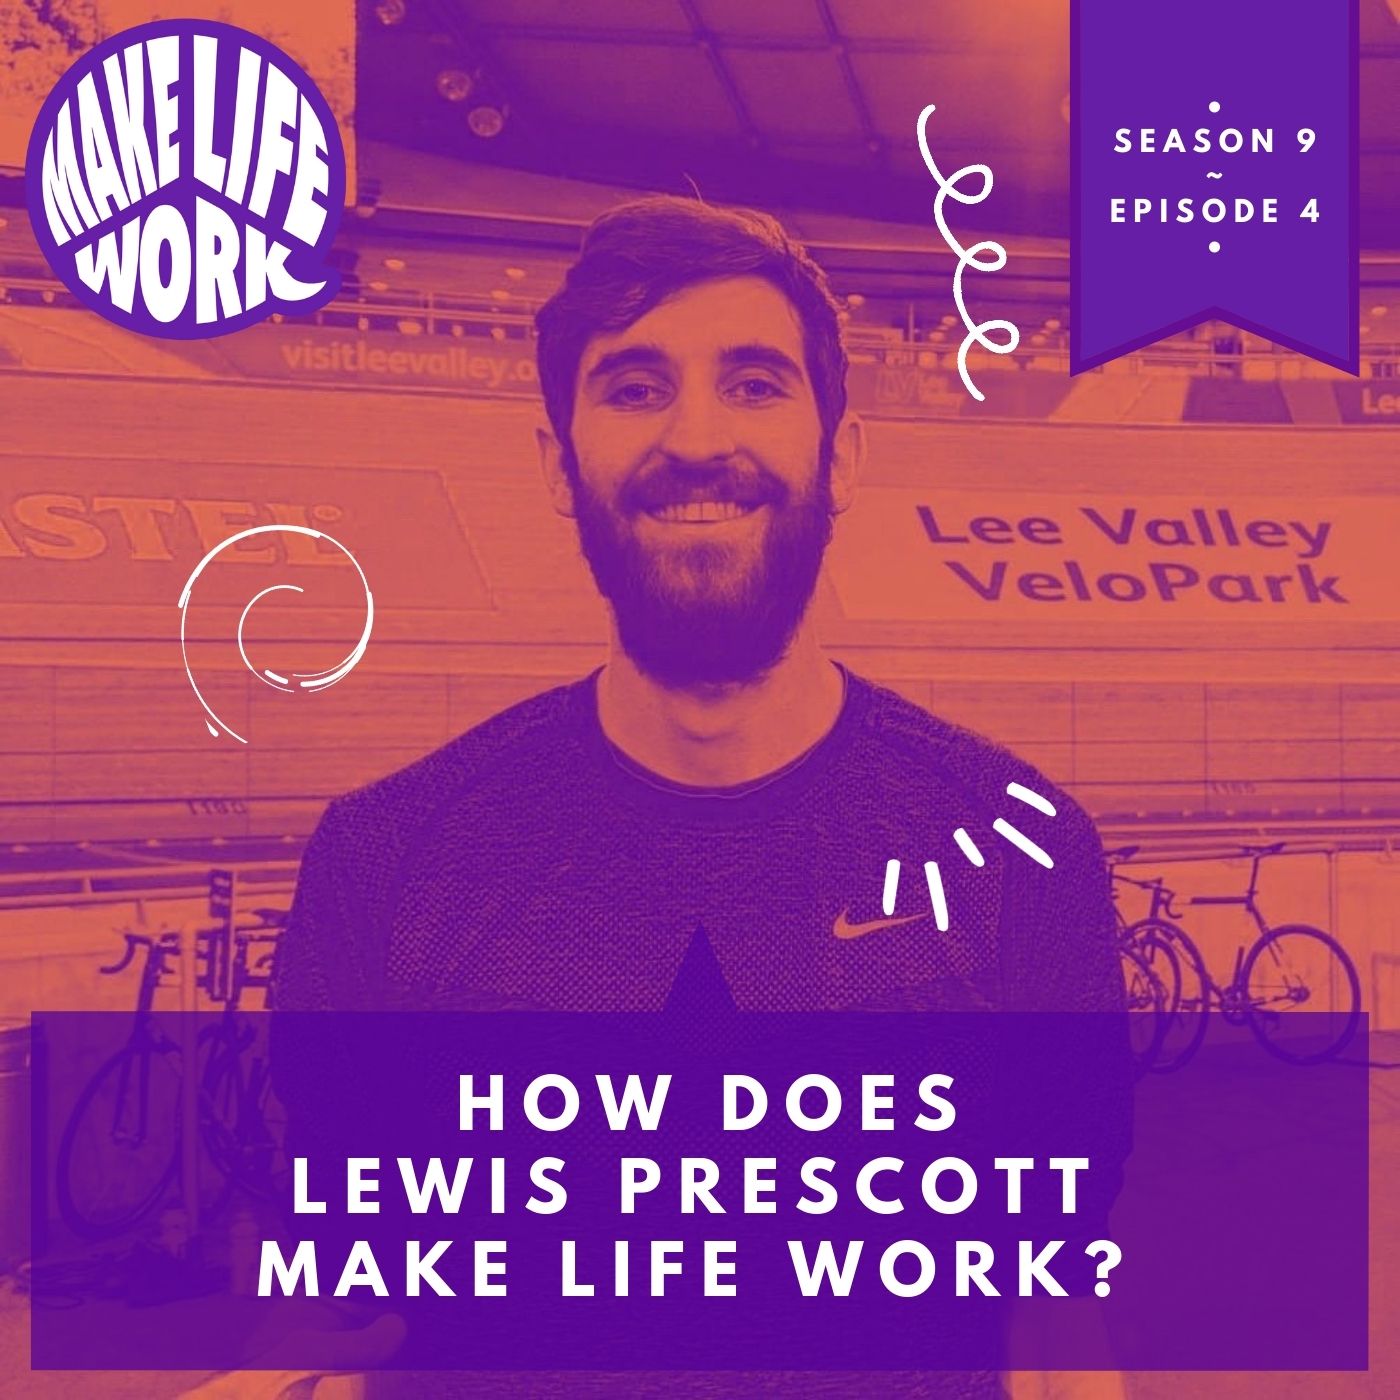 How does Lewis Prescott make life work?